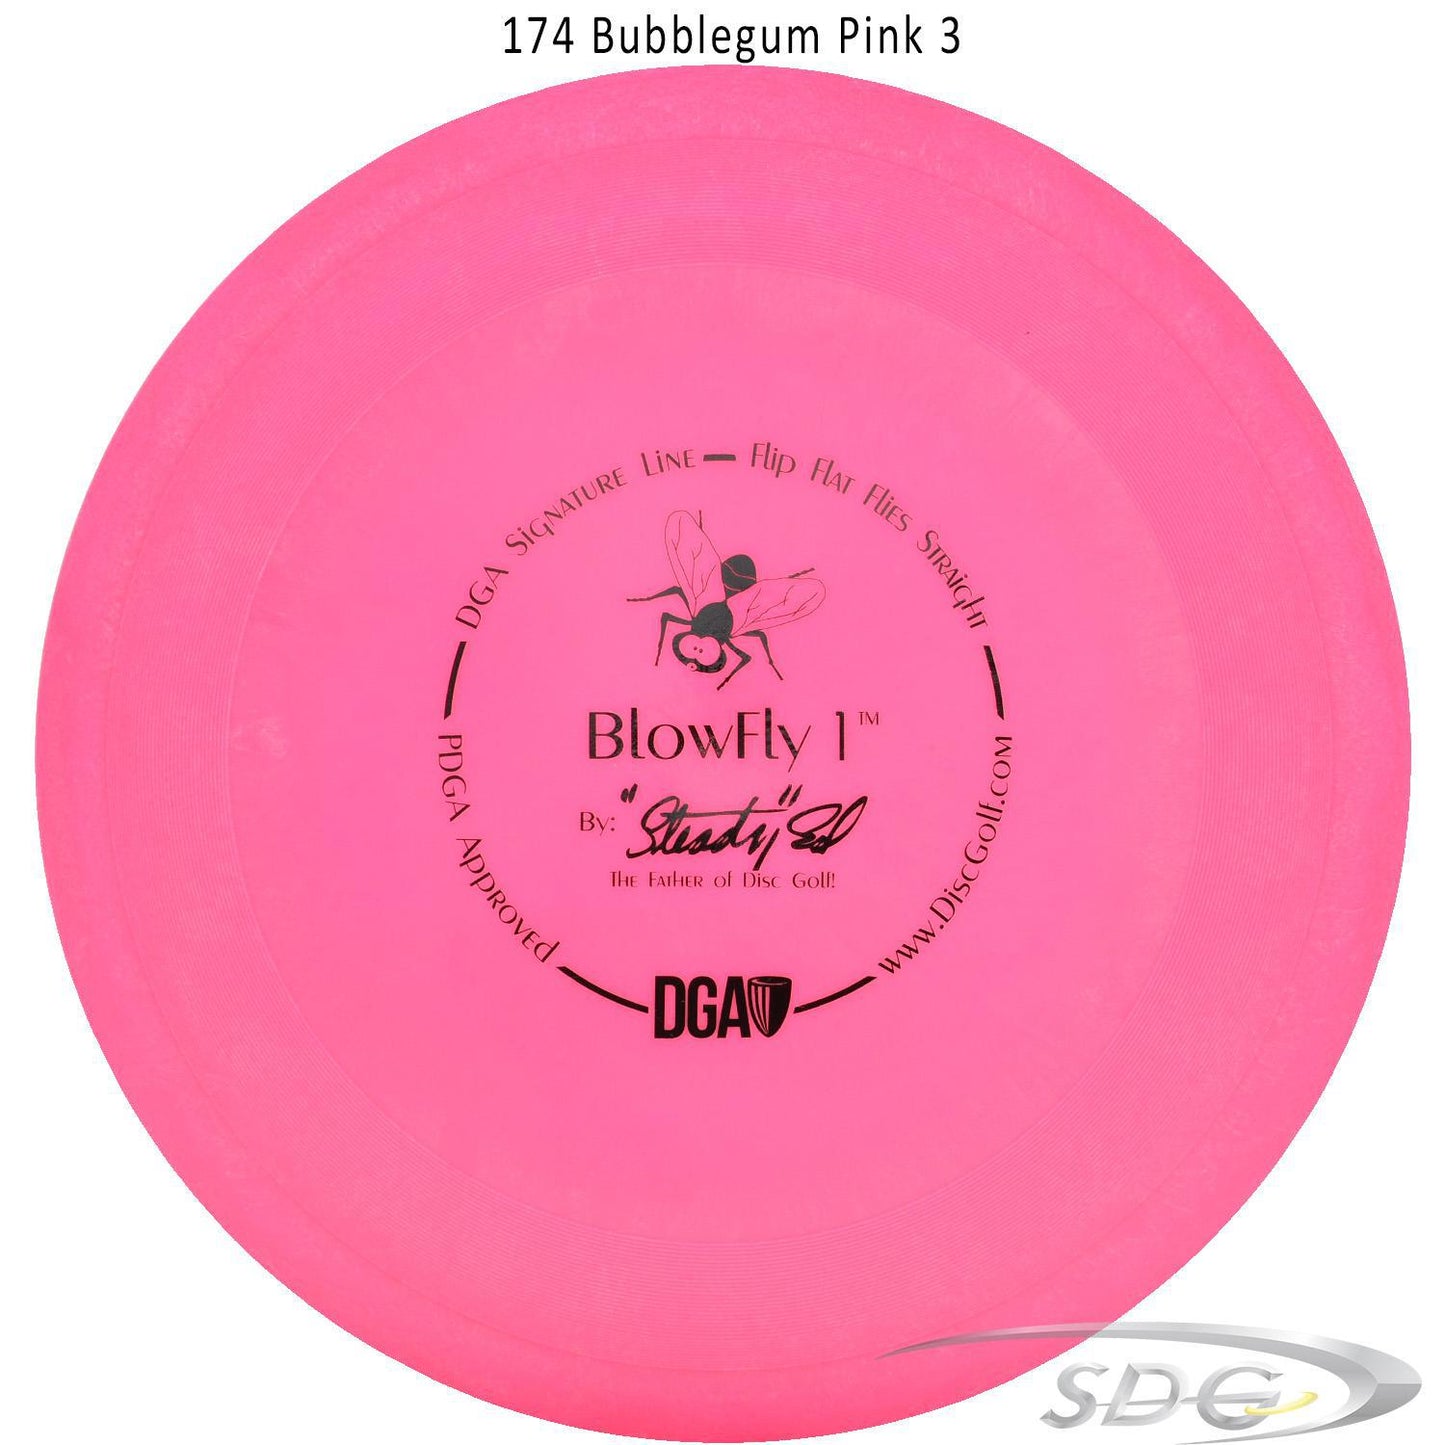 dga-signature-line-blowfly-1-disc-golf-putter 174 Bubblegum Pink 3 